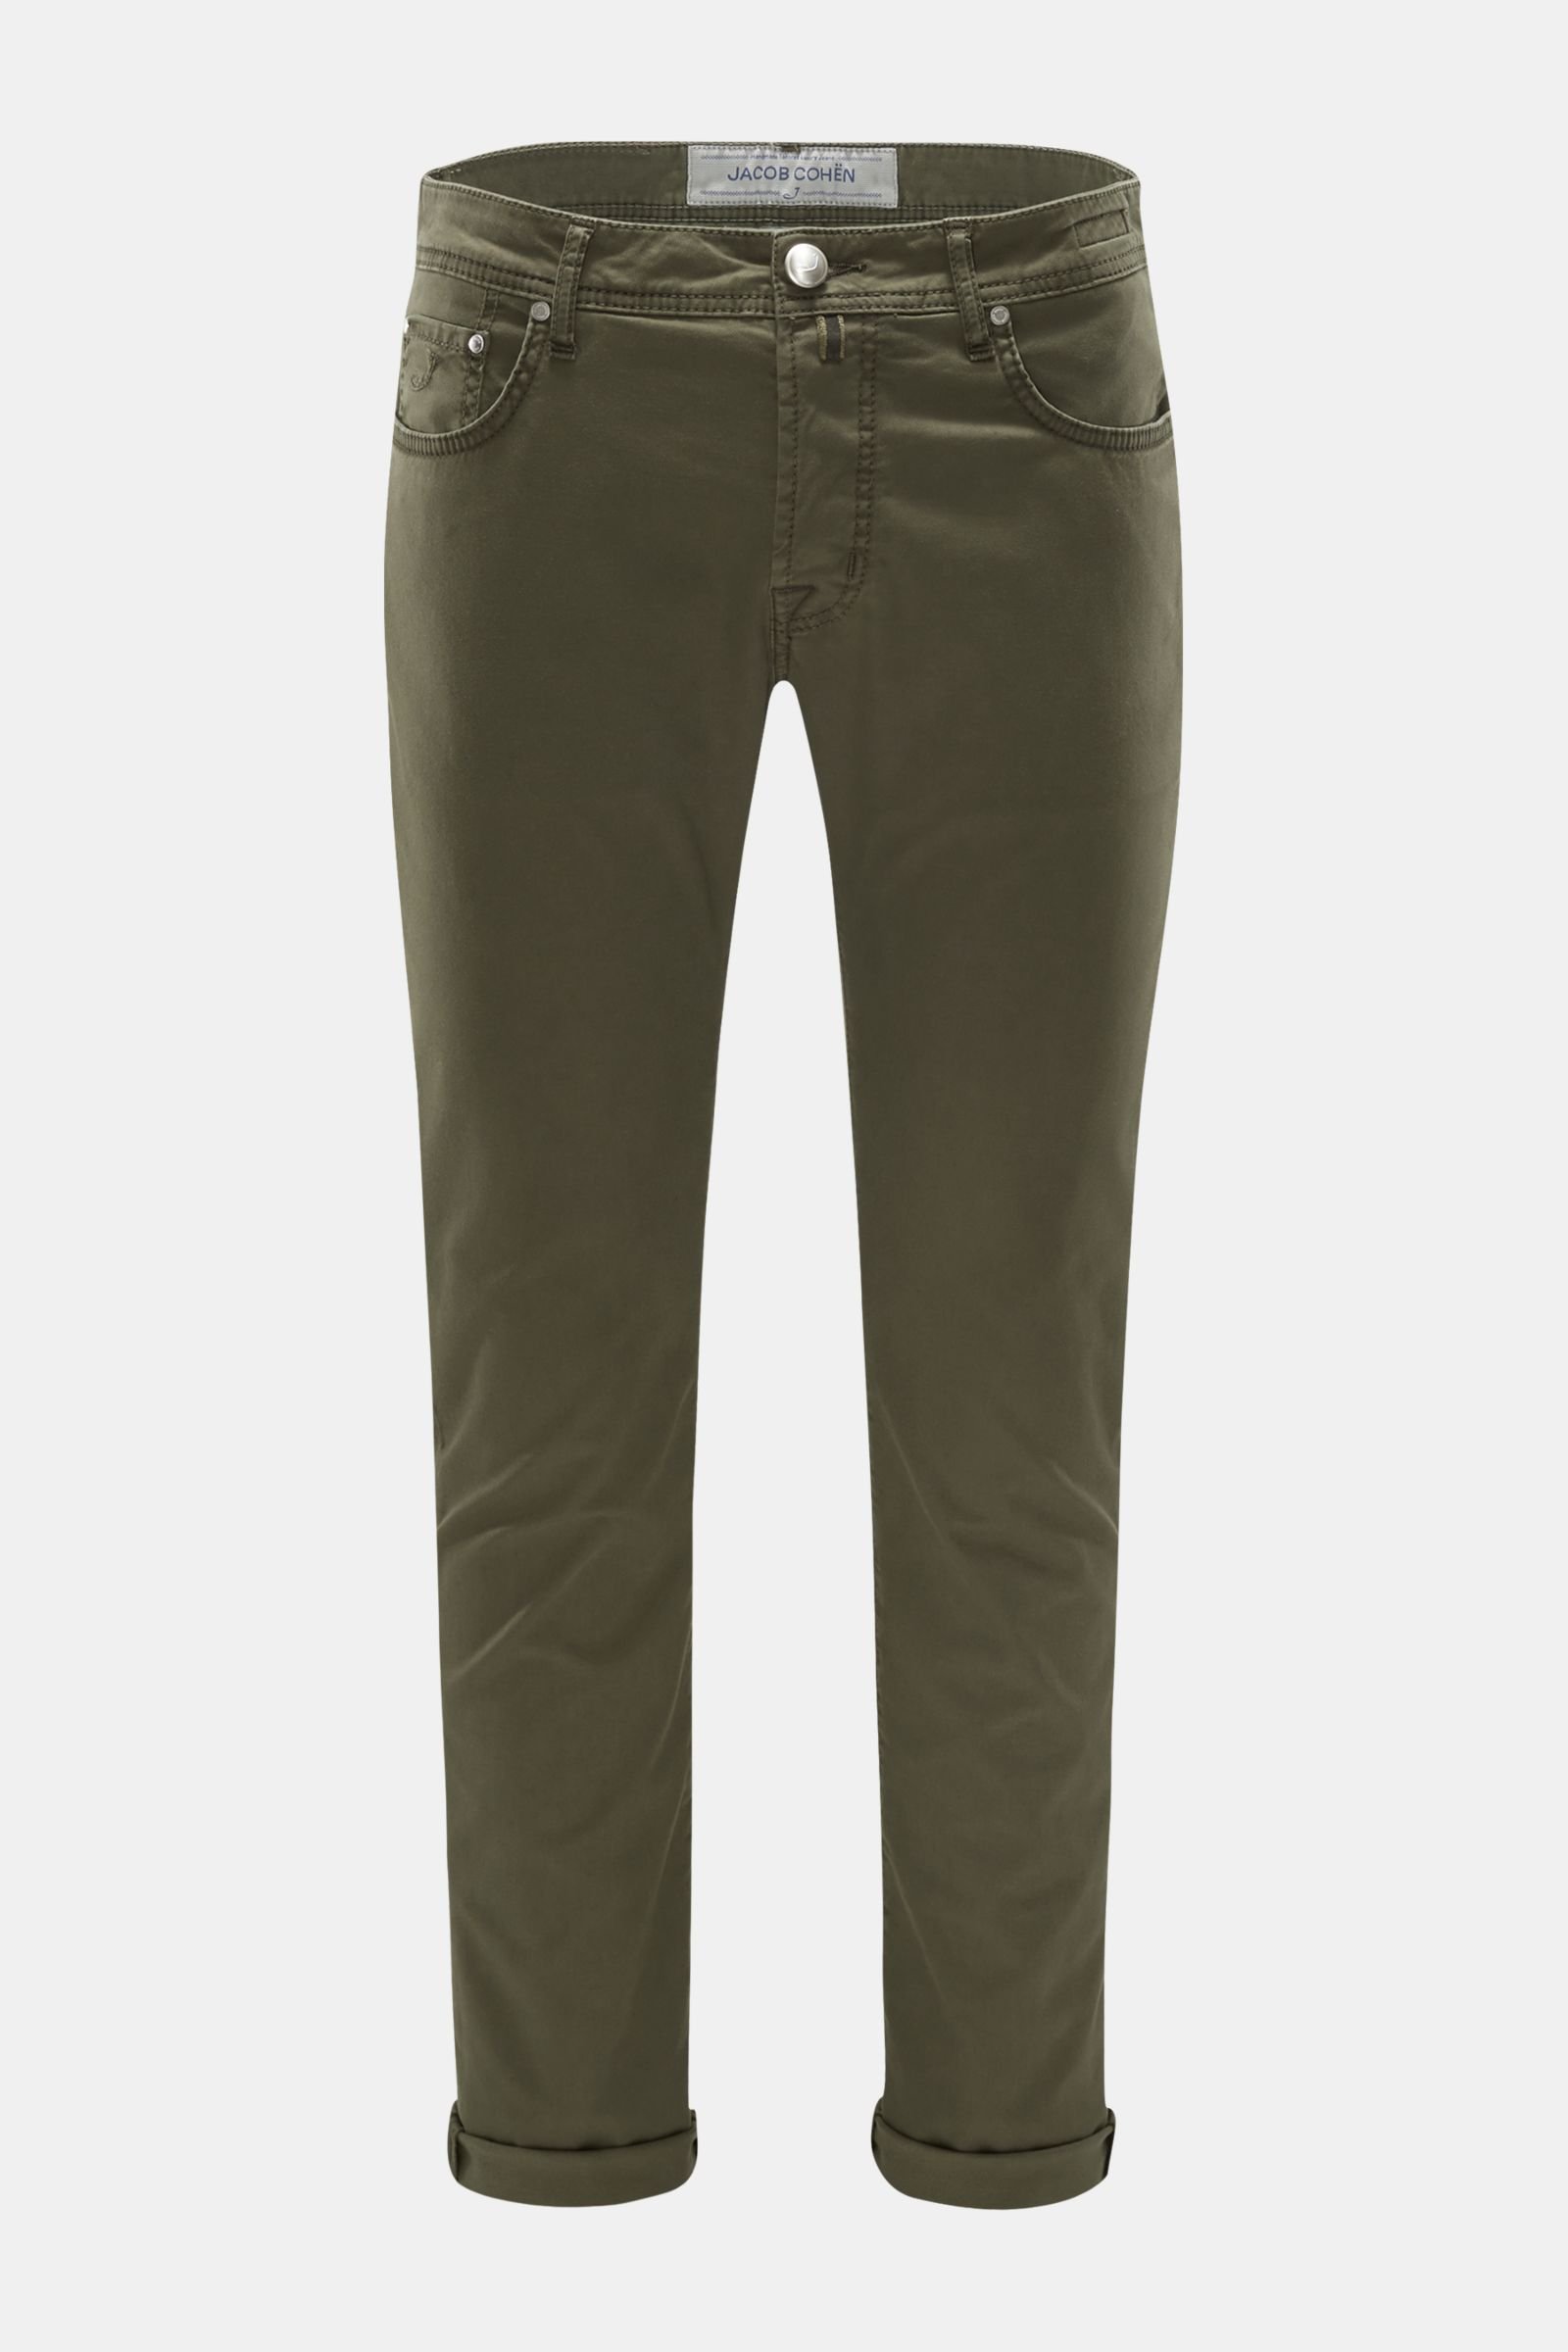 Trousers 'J688 Comfort Slim Fit' olive